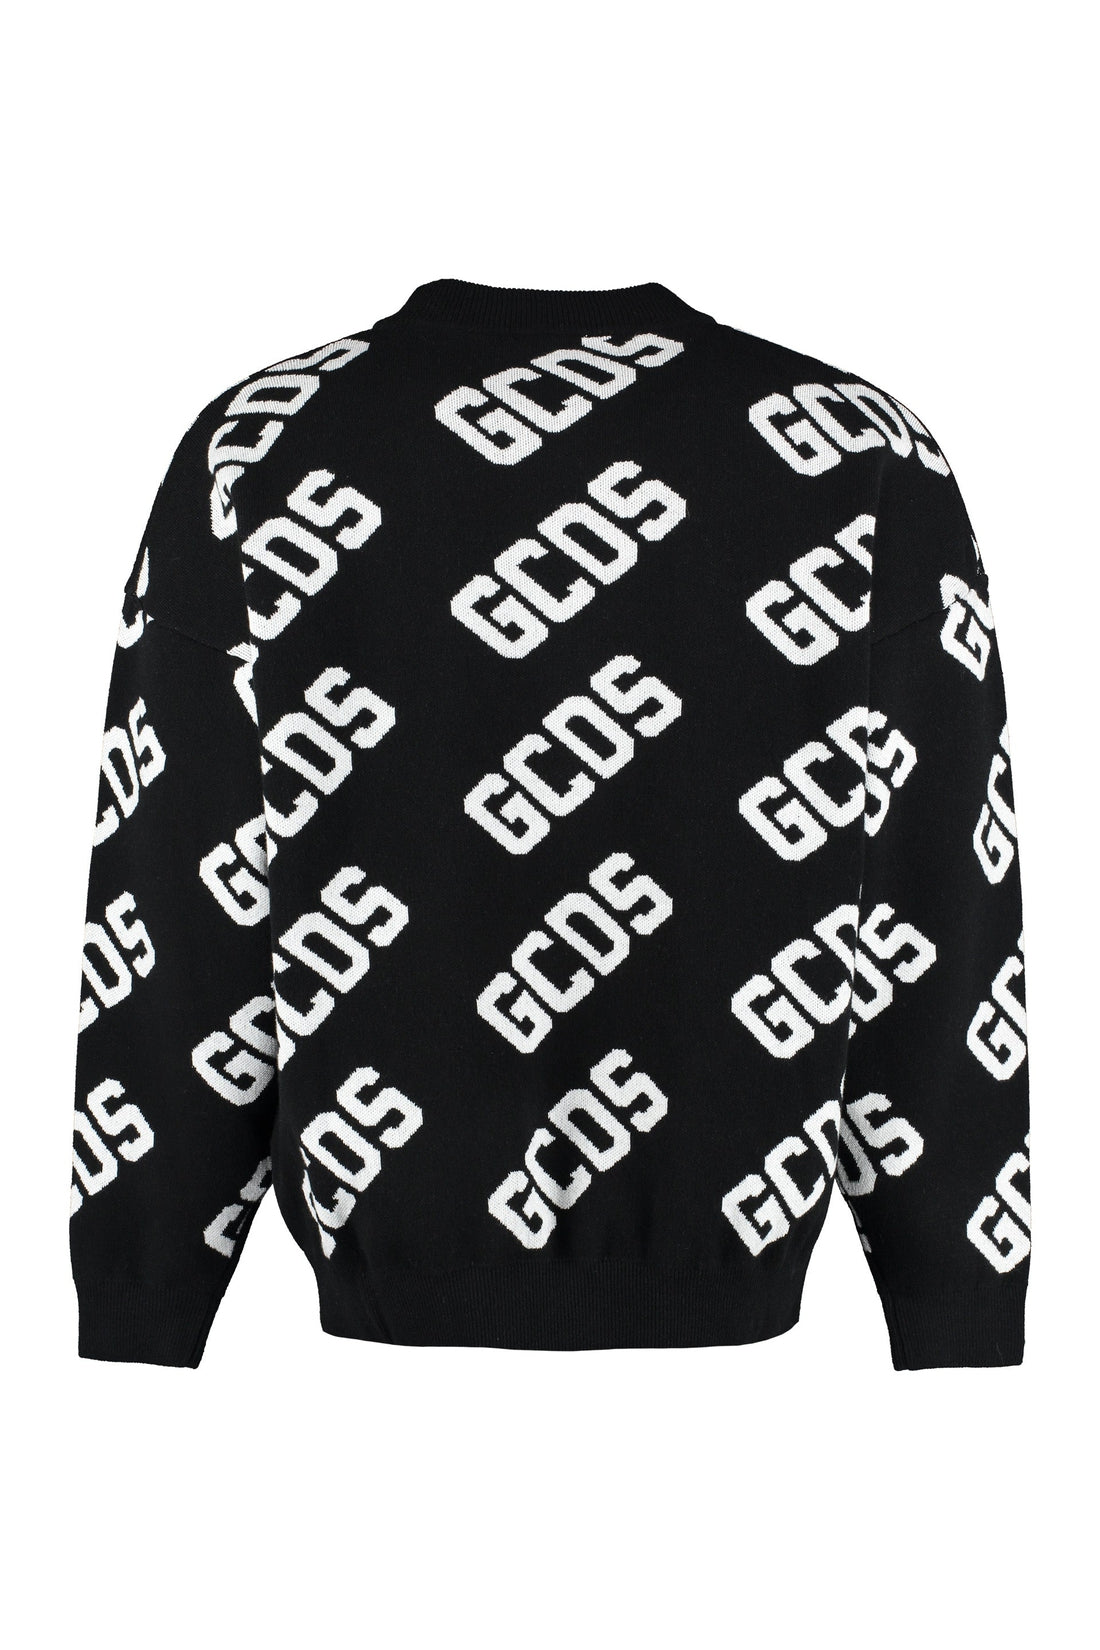 GCDS-OUTLET-SALE-Wool-blend crew-neck sweater-ARCHIVIST